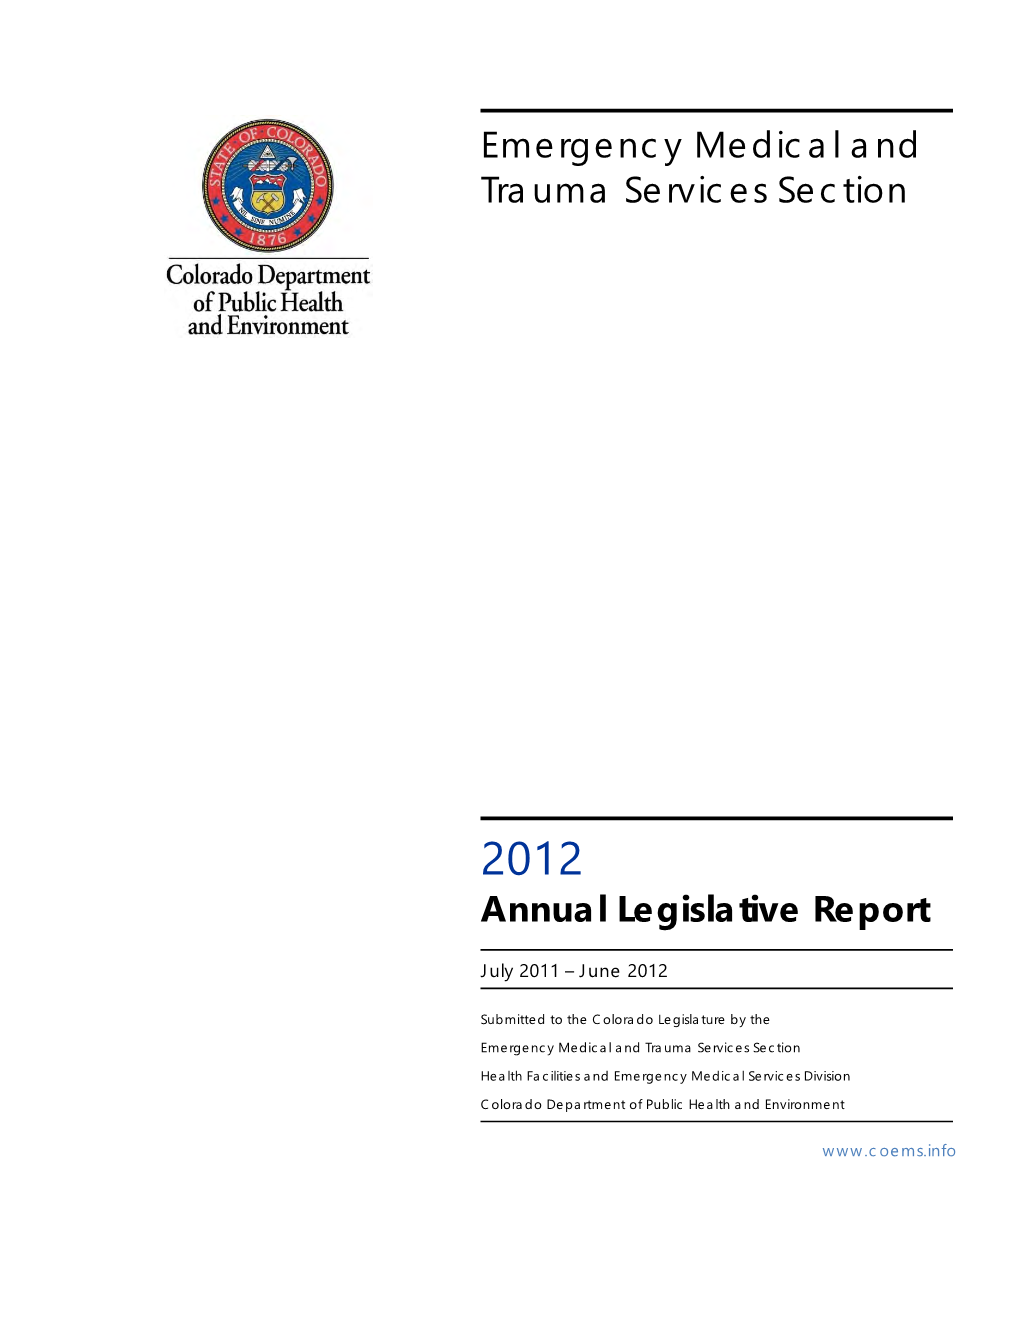 Emergency Medical and Trauma Services Section Annual Legislative